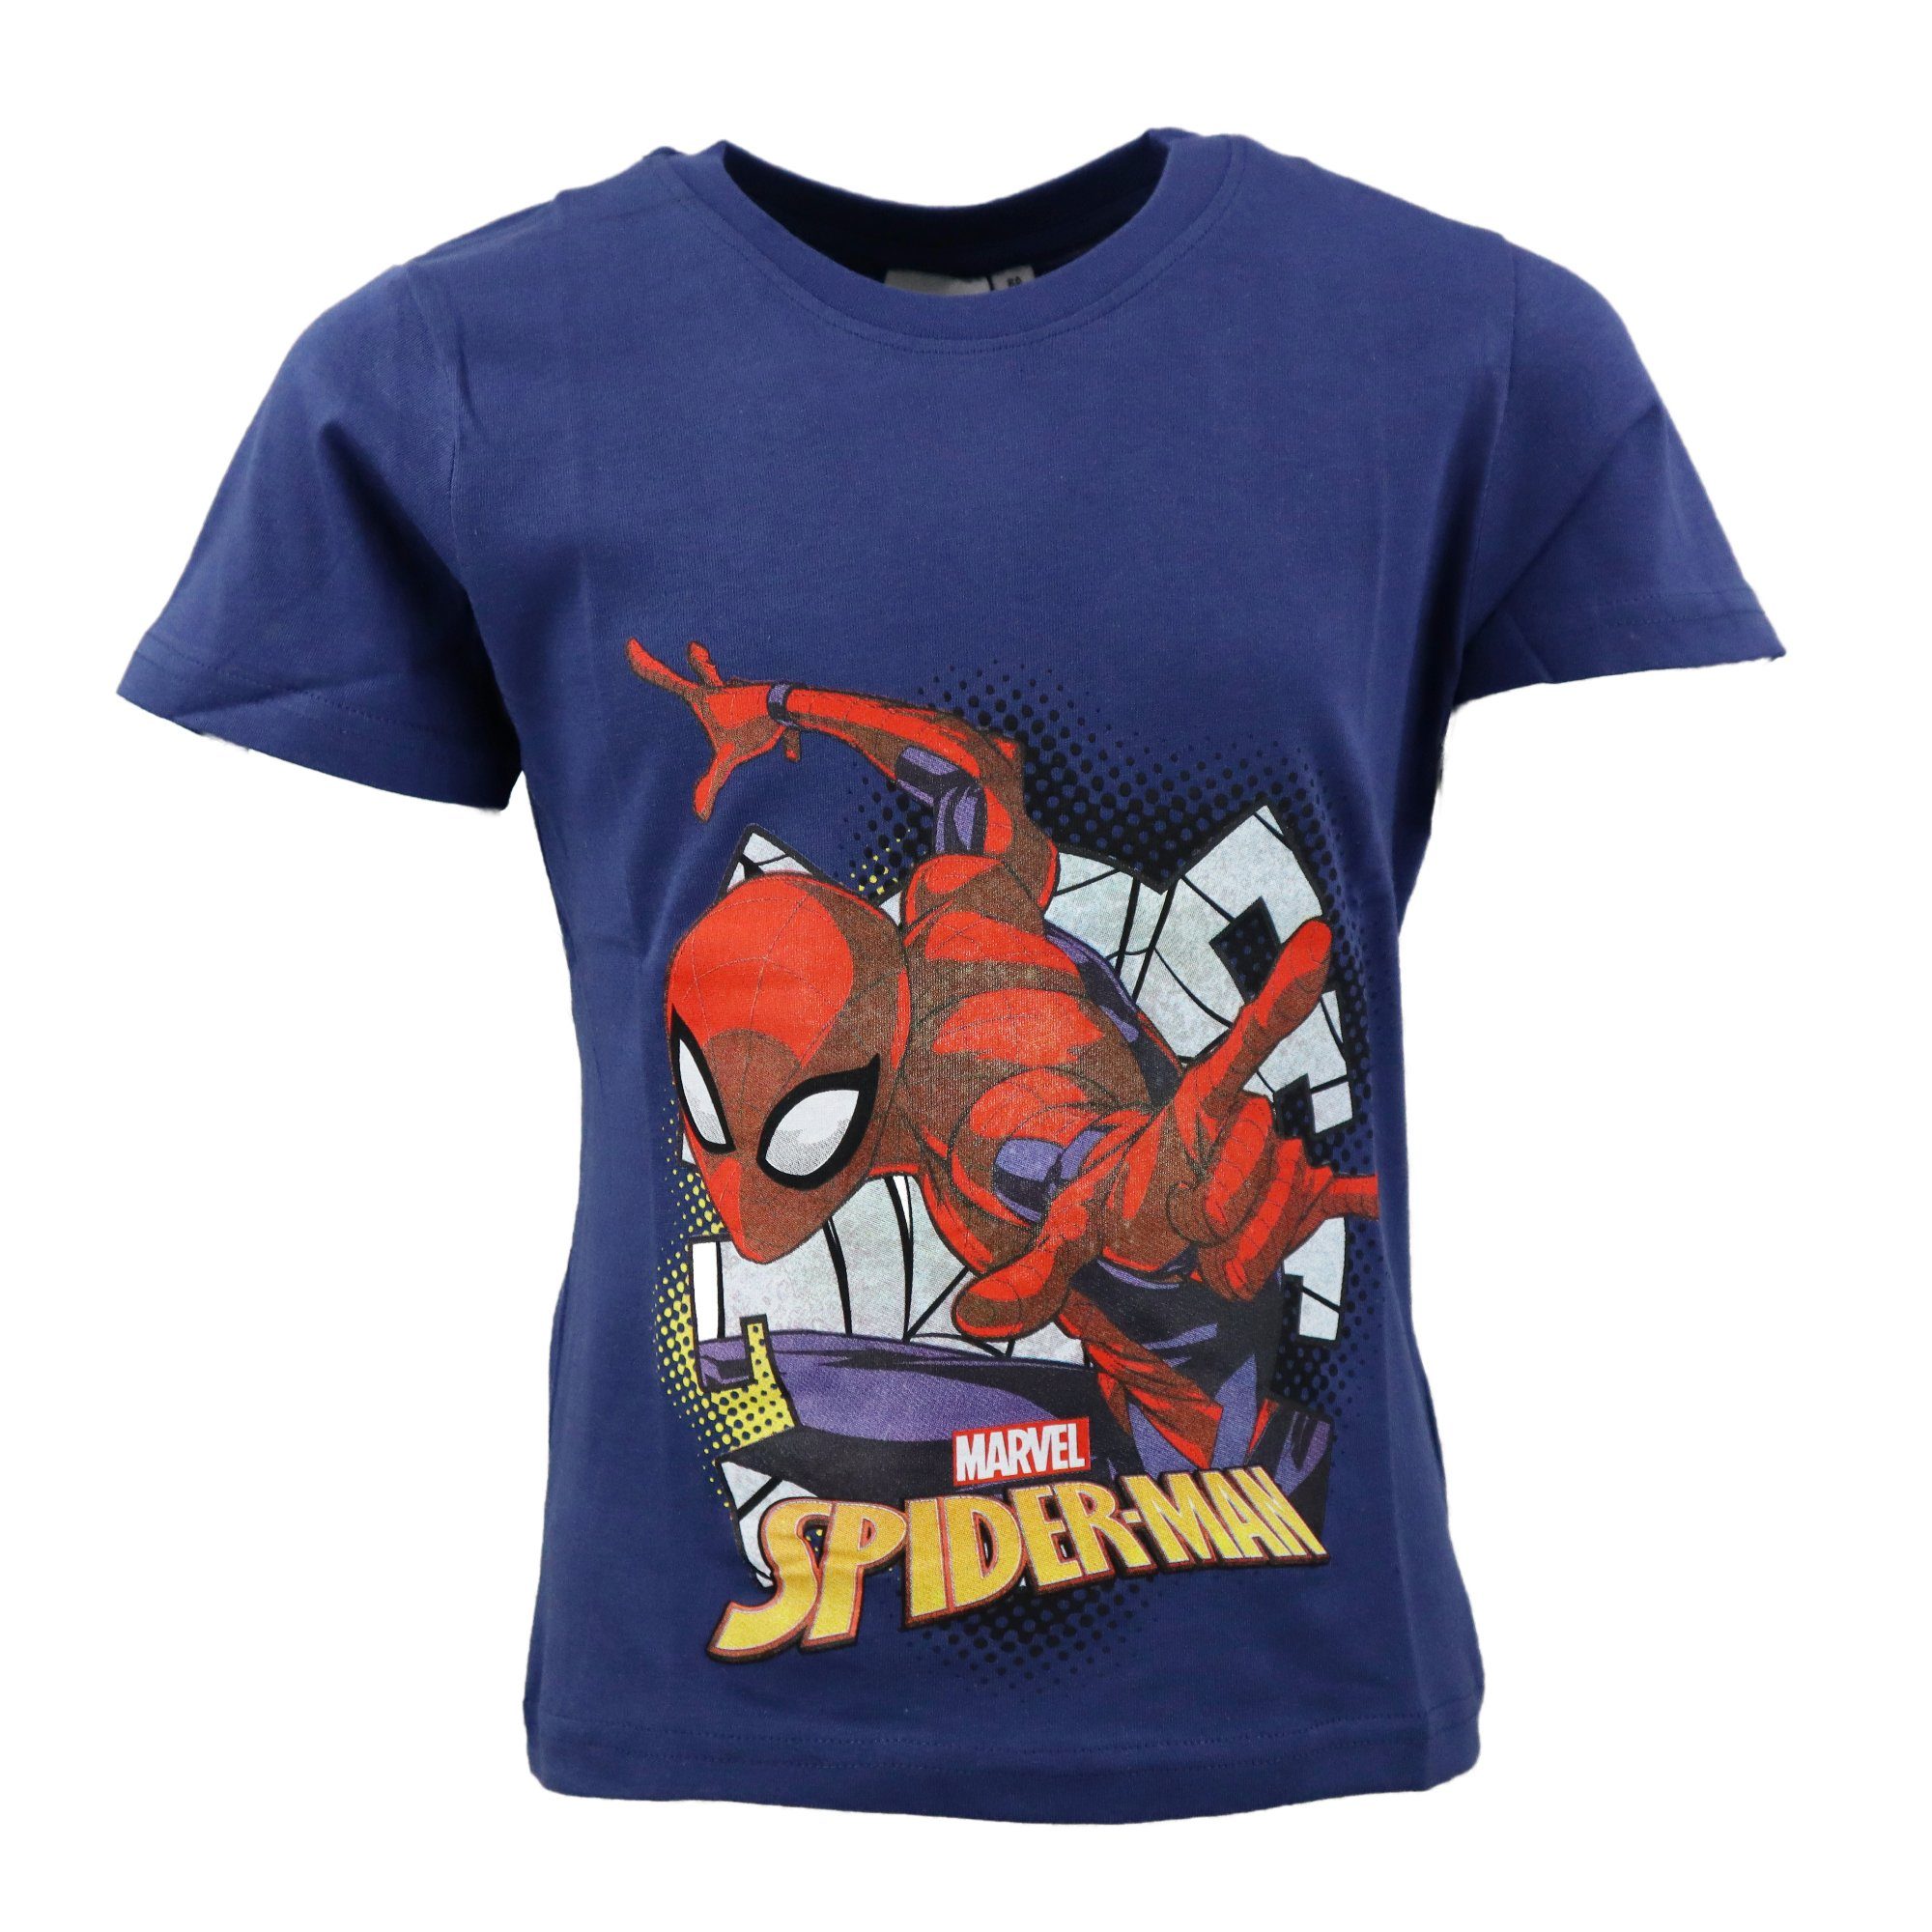 Baumwolle Spiderman bis Print-Shirt Dunkelblau Kinder Jungen T-Shirt Shirt MARVEL 98 kurzarm 100% Gr. 128,